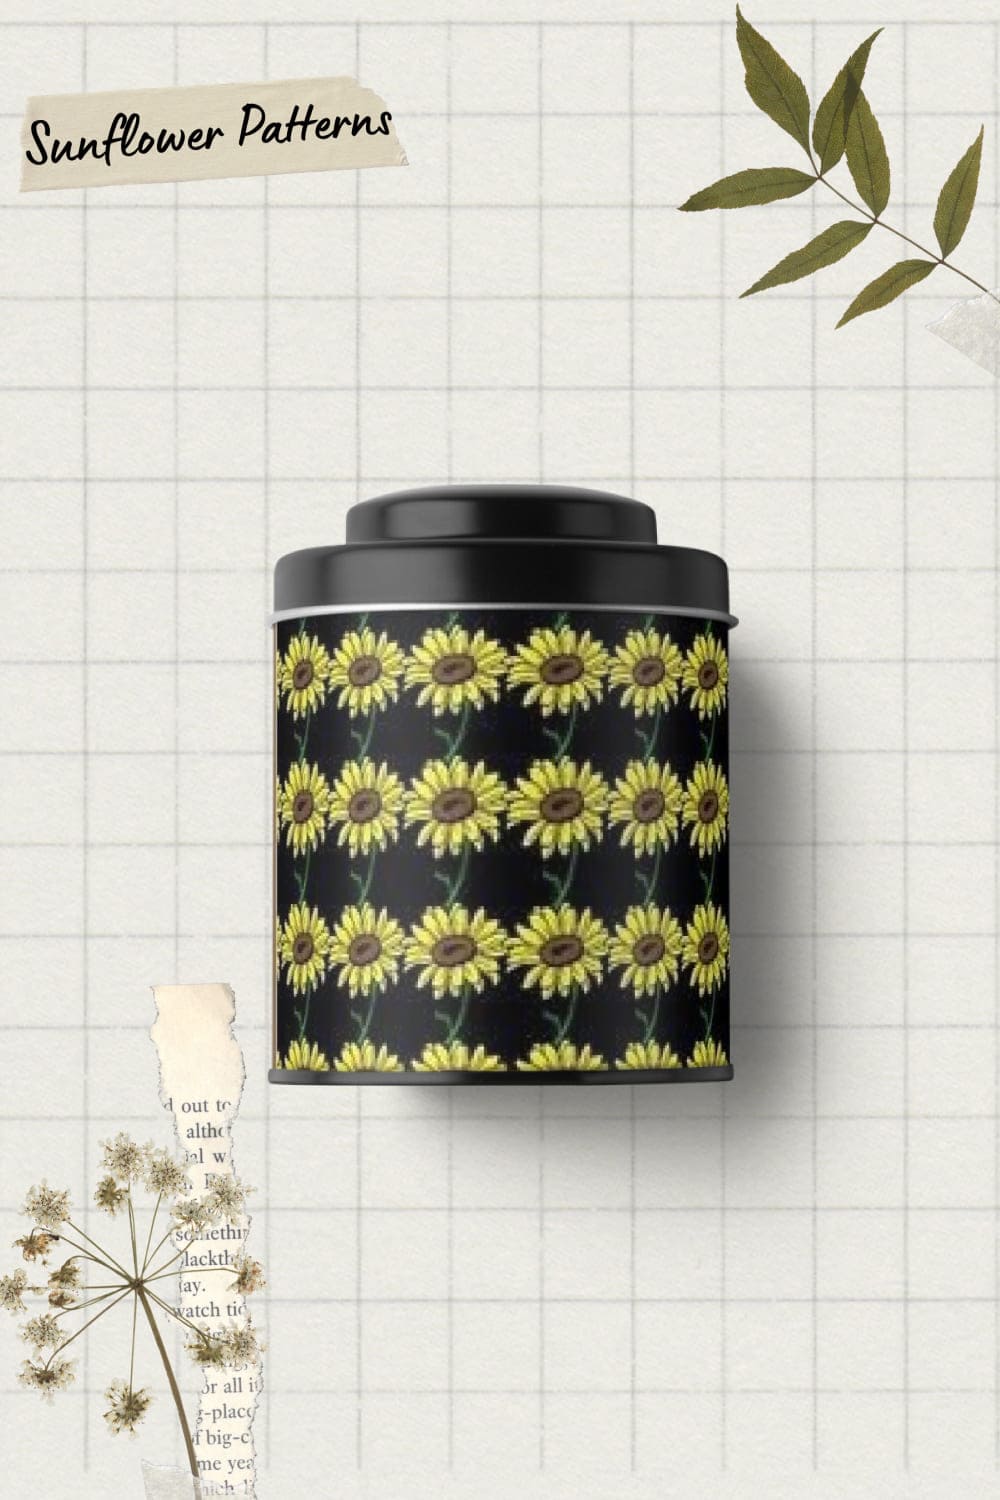 Sunflower patterns on a food jar.